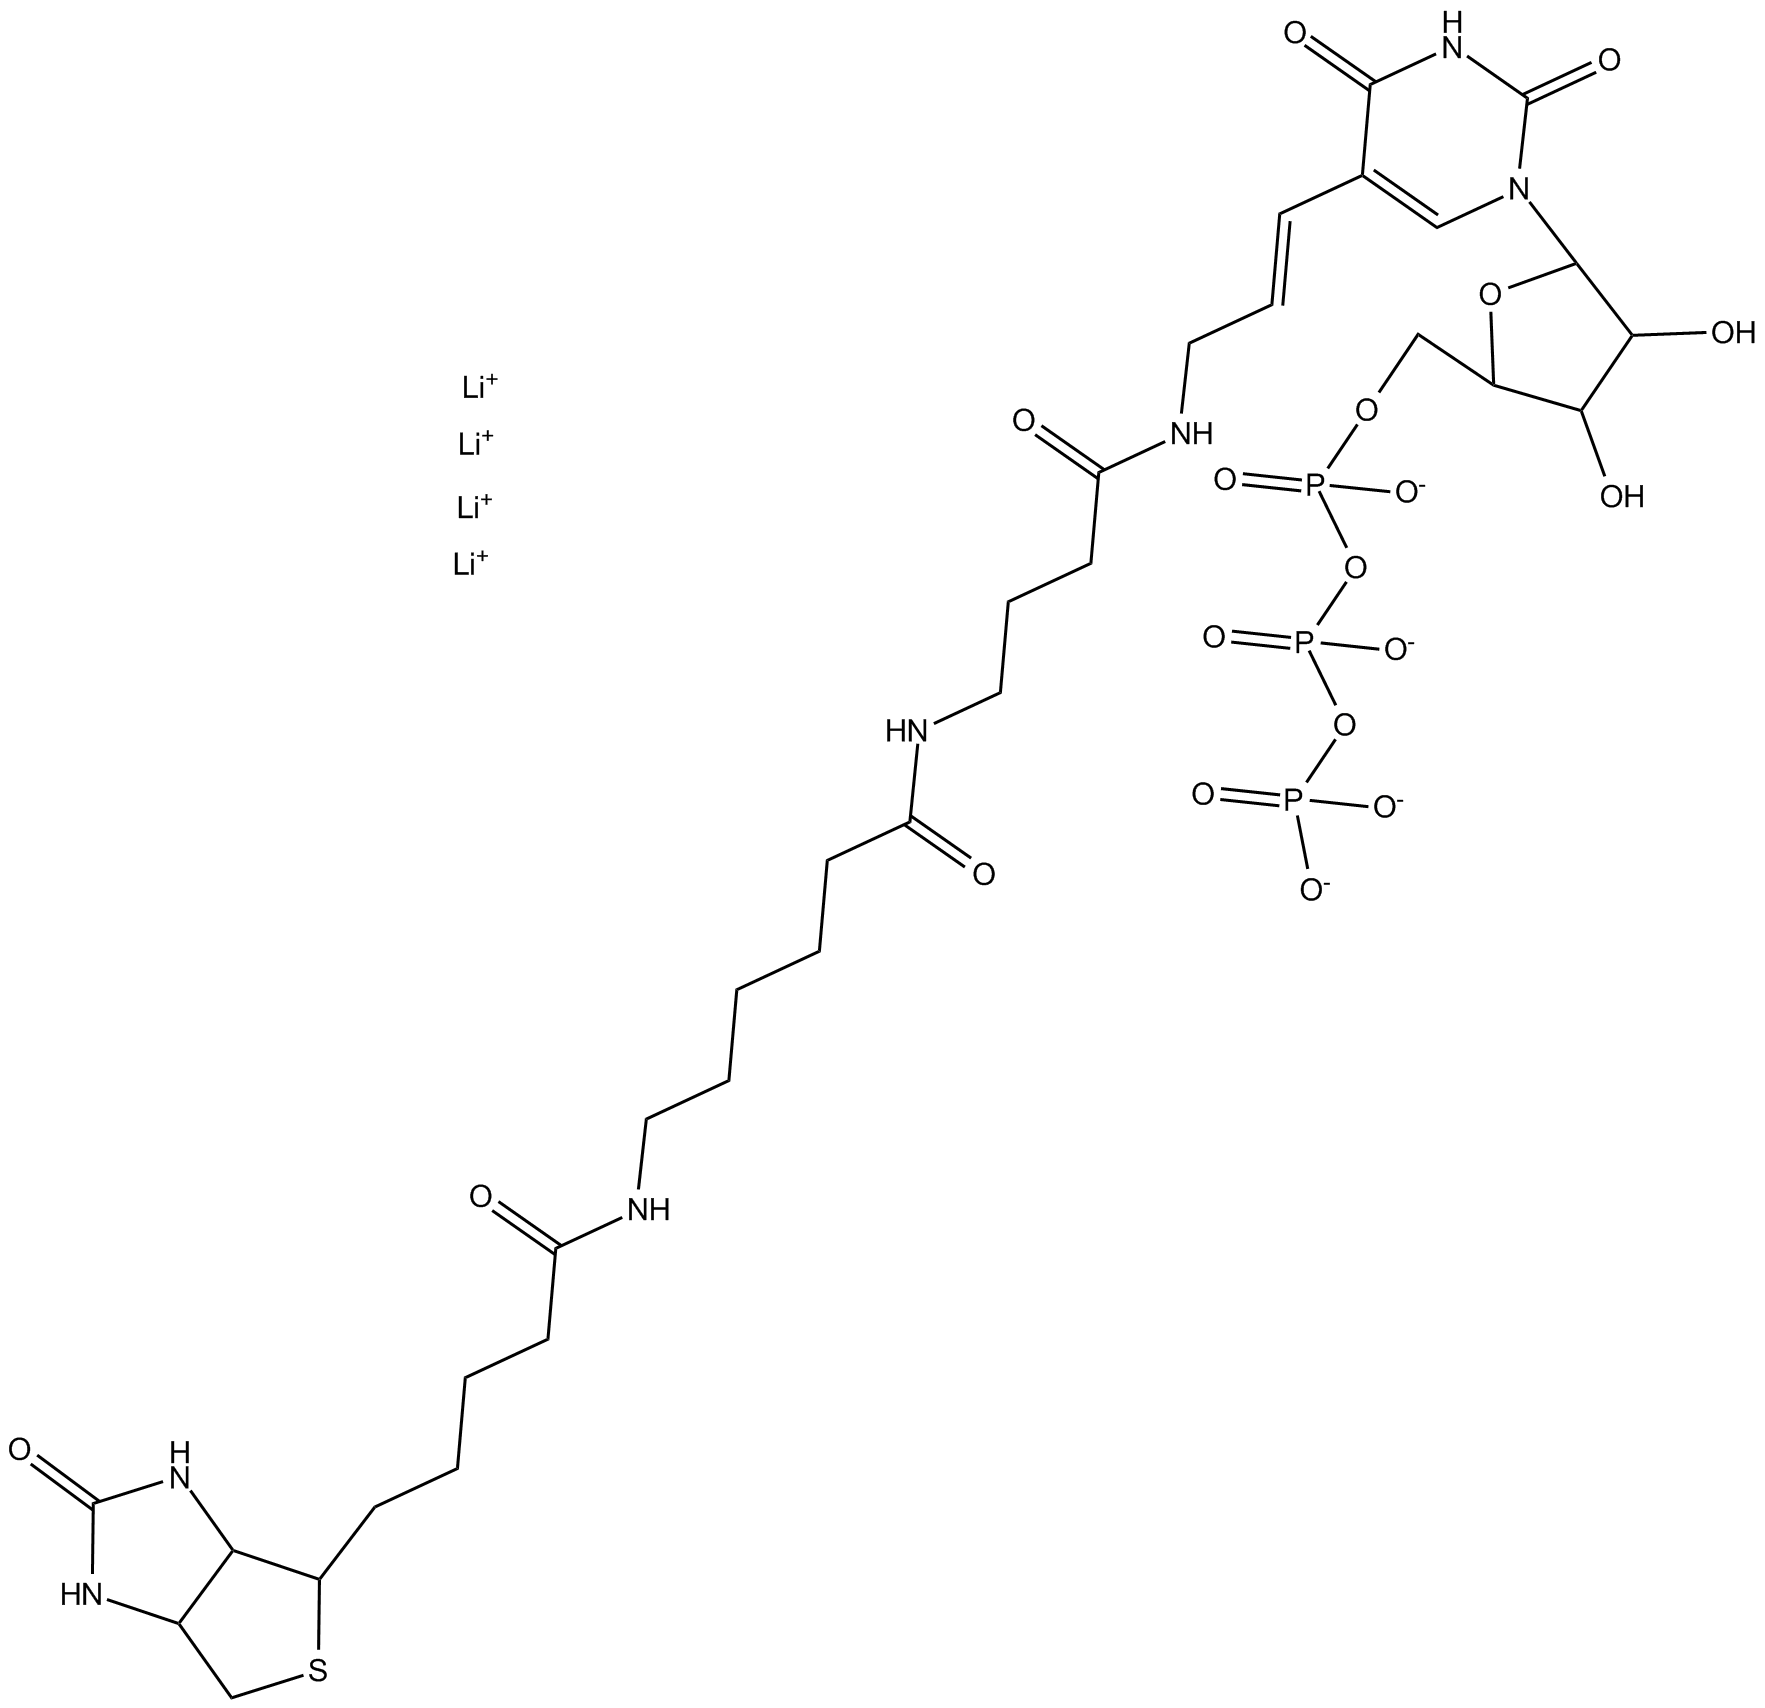 Biotin-16-UTP  Chemical Structure